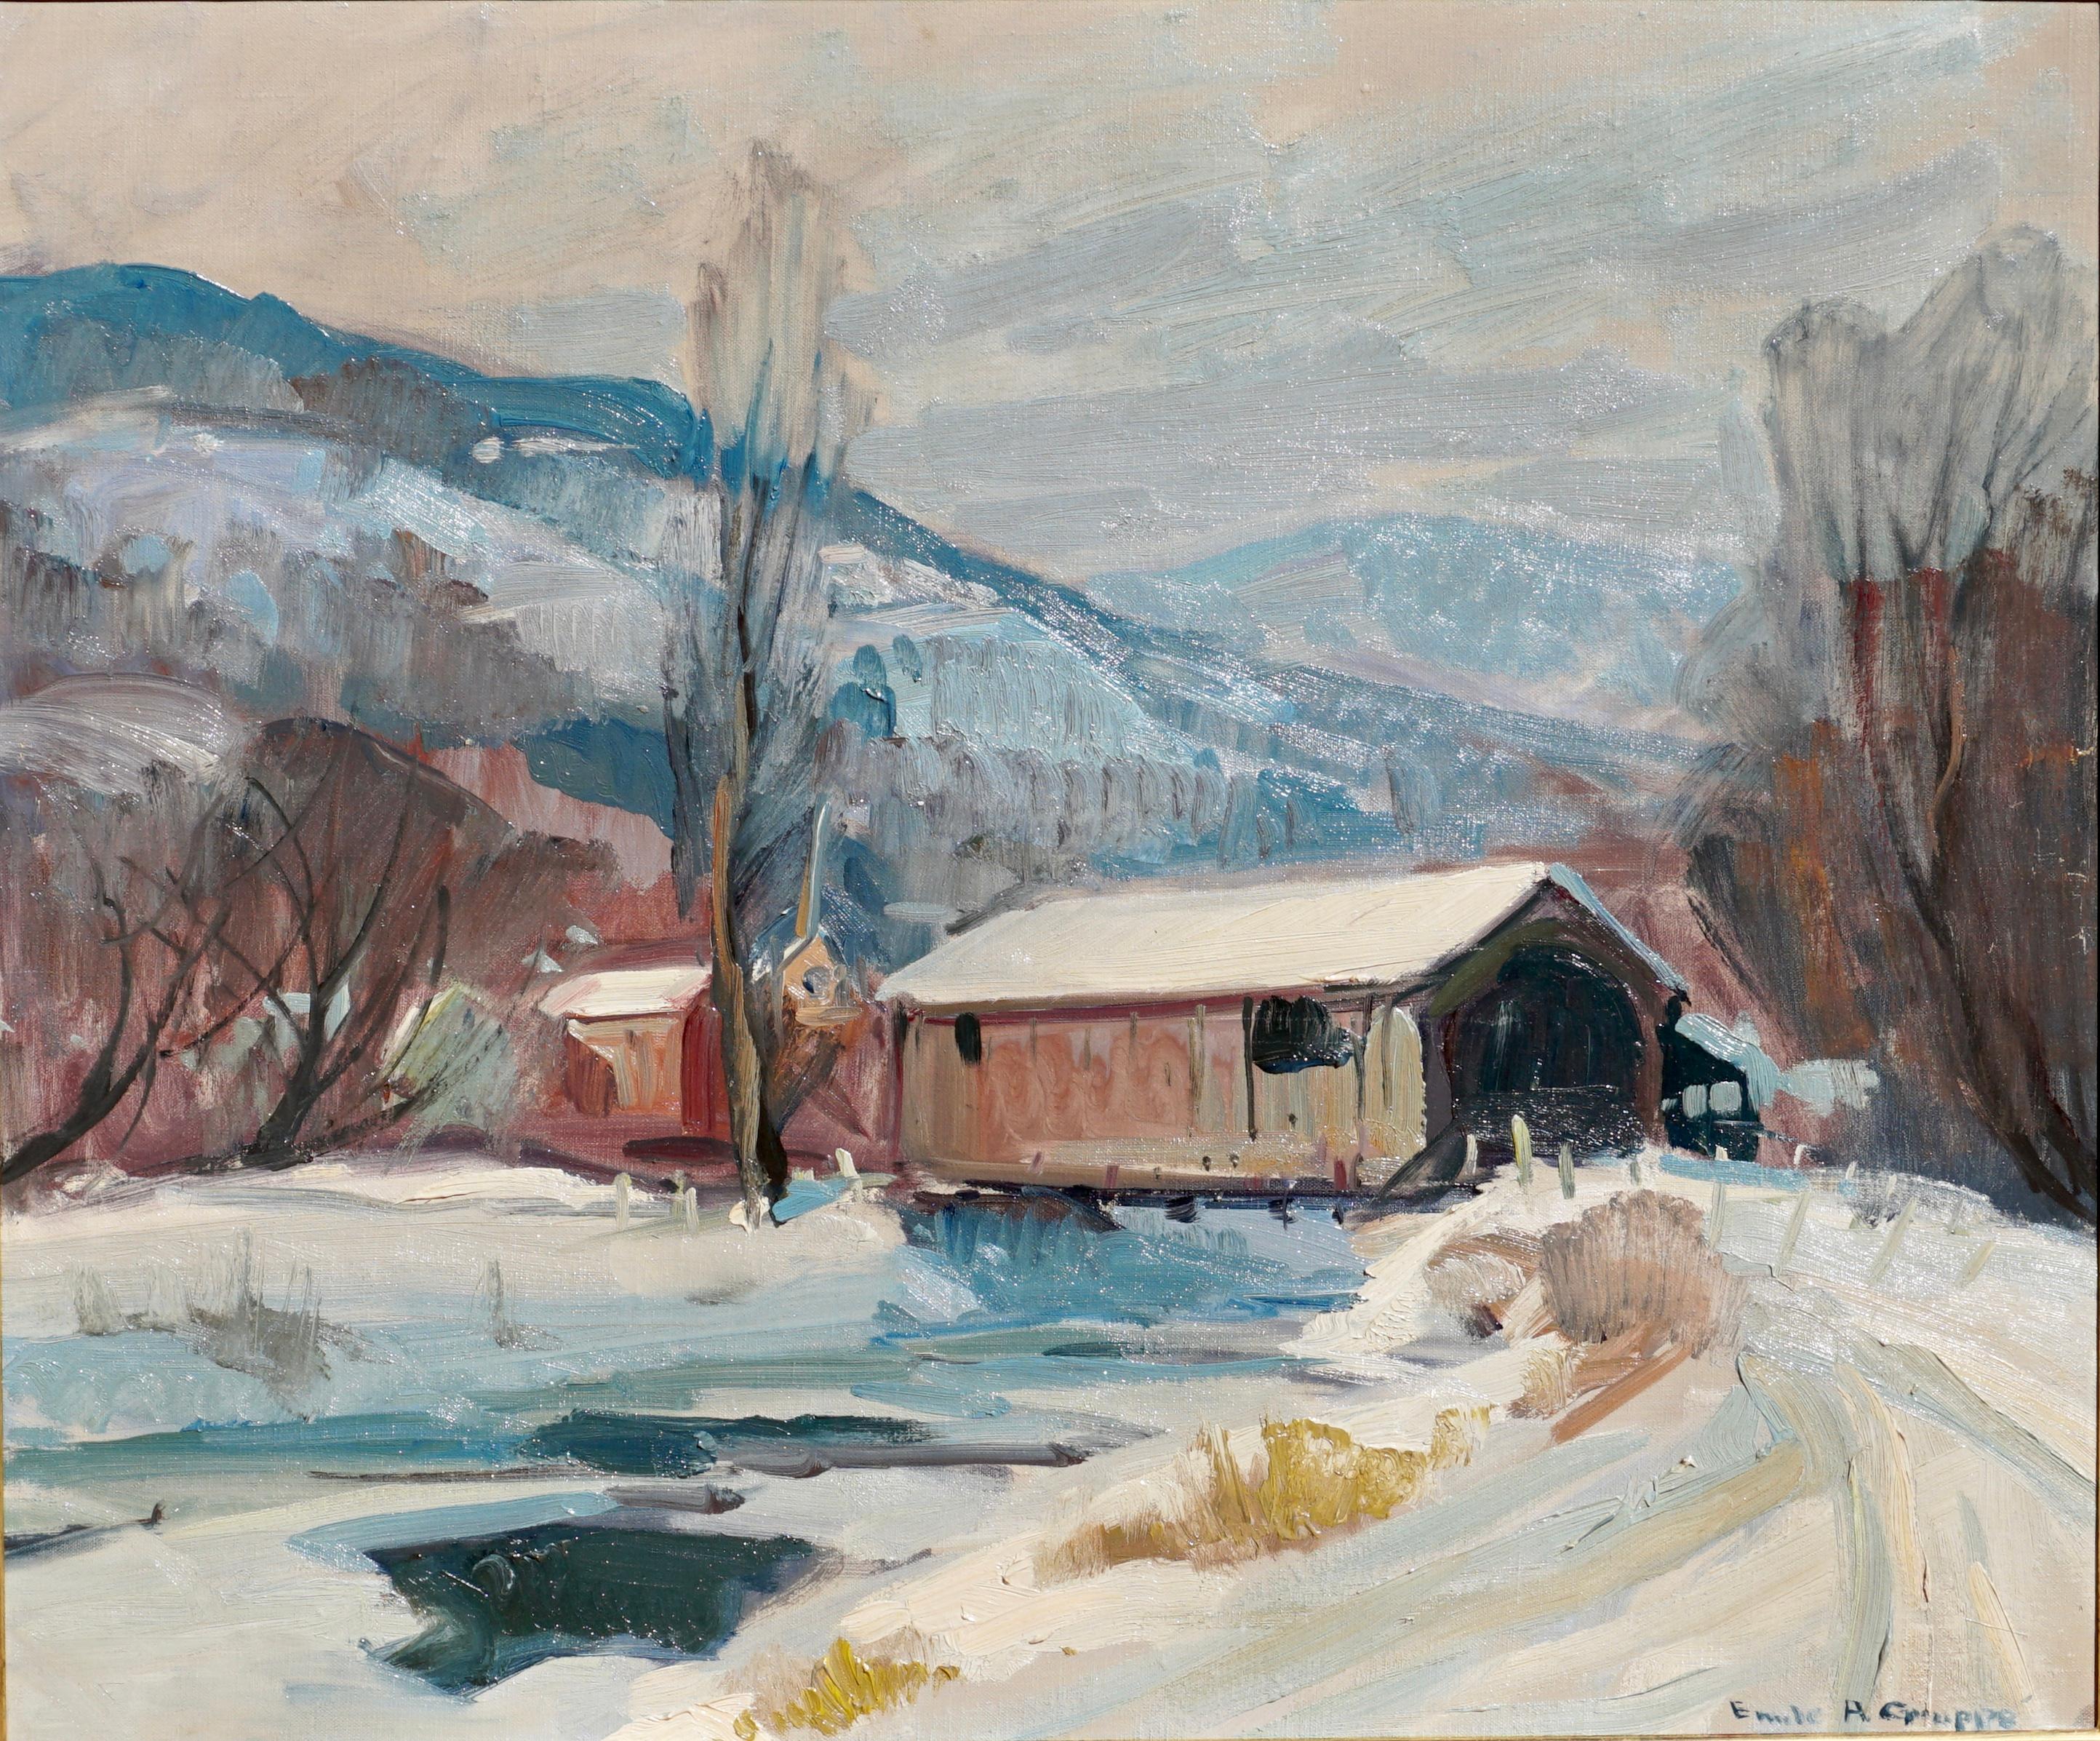 American Emile Albert Gruppe 'Mass 1896-1978' “Covered Bridge” Snow Painting